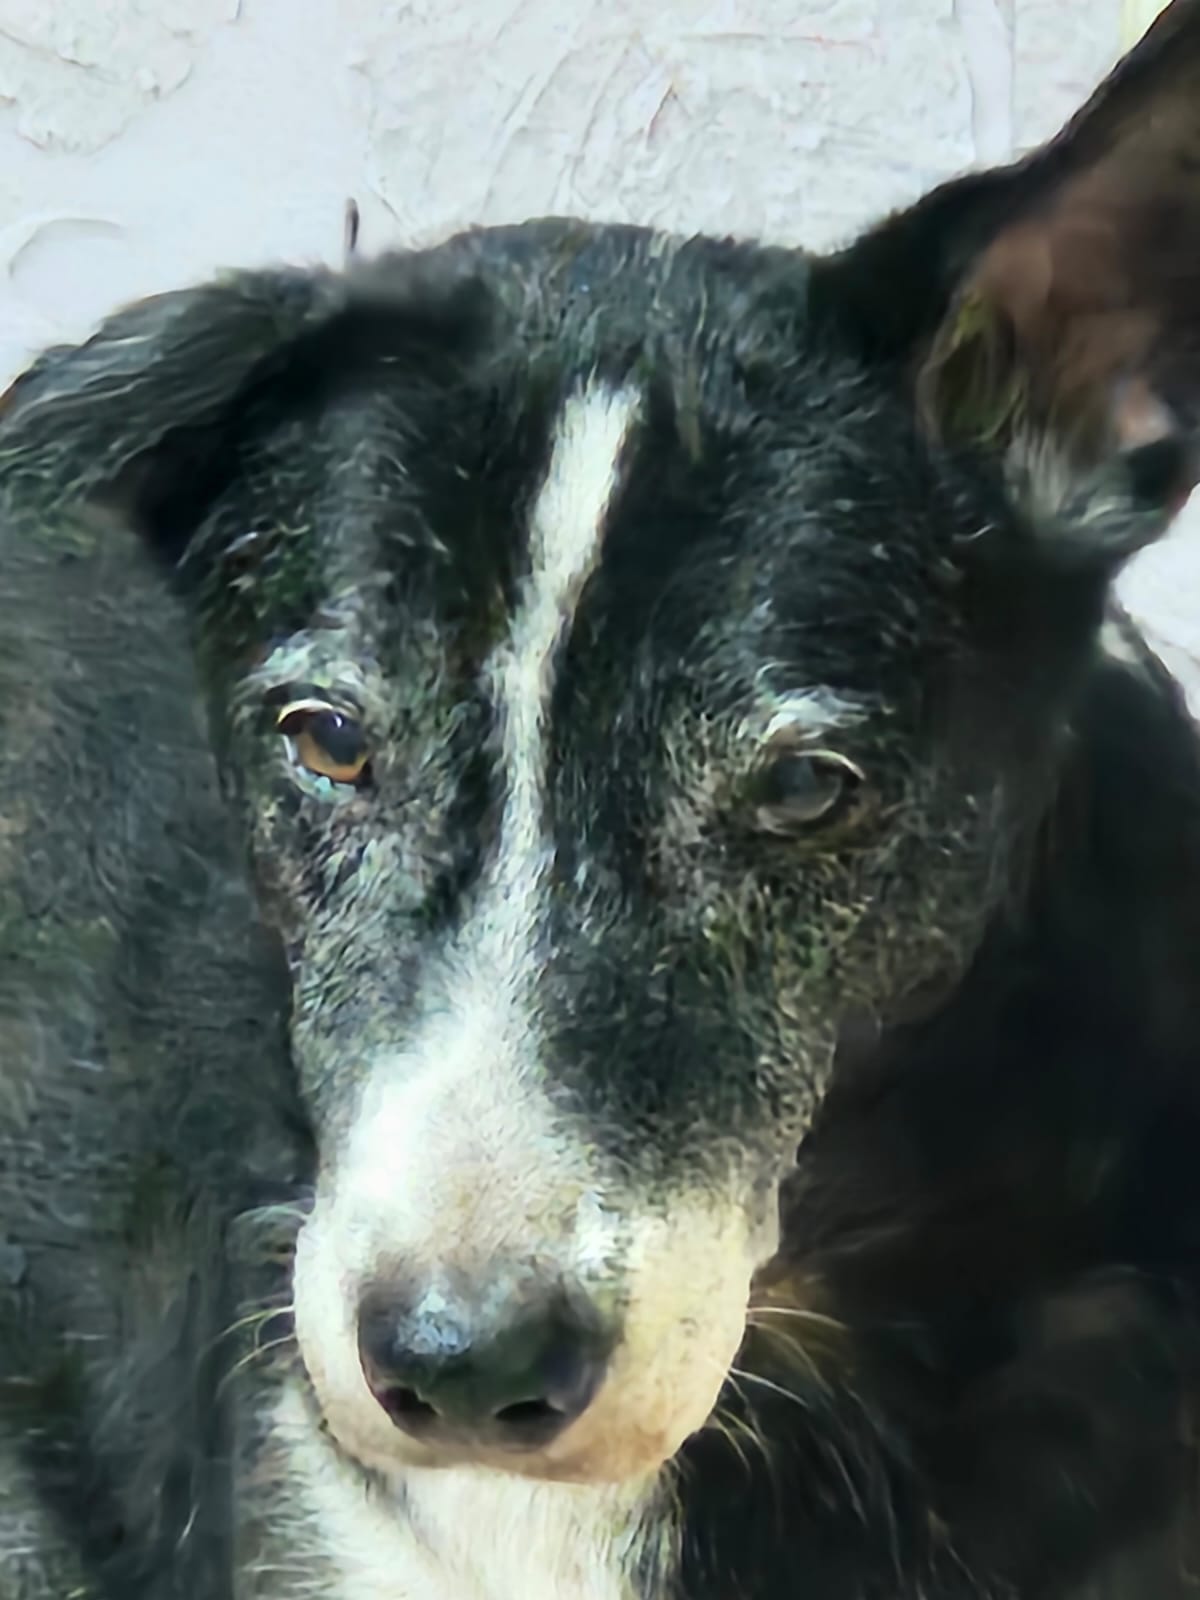 Kallu- An Indian dog missing in New Delhi